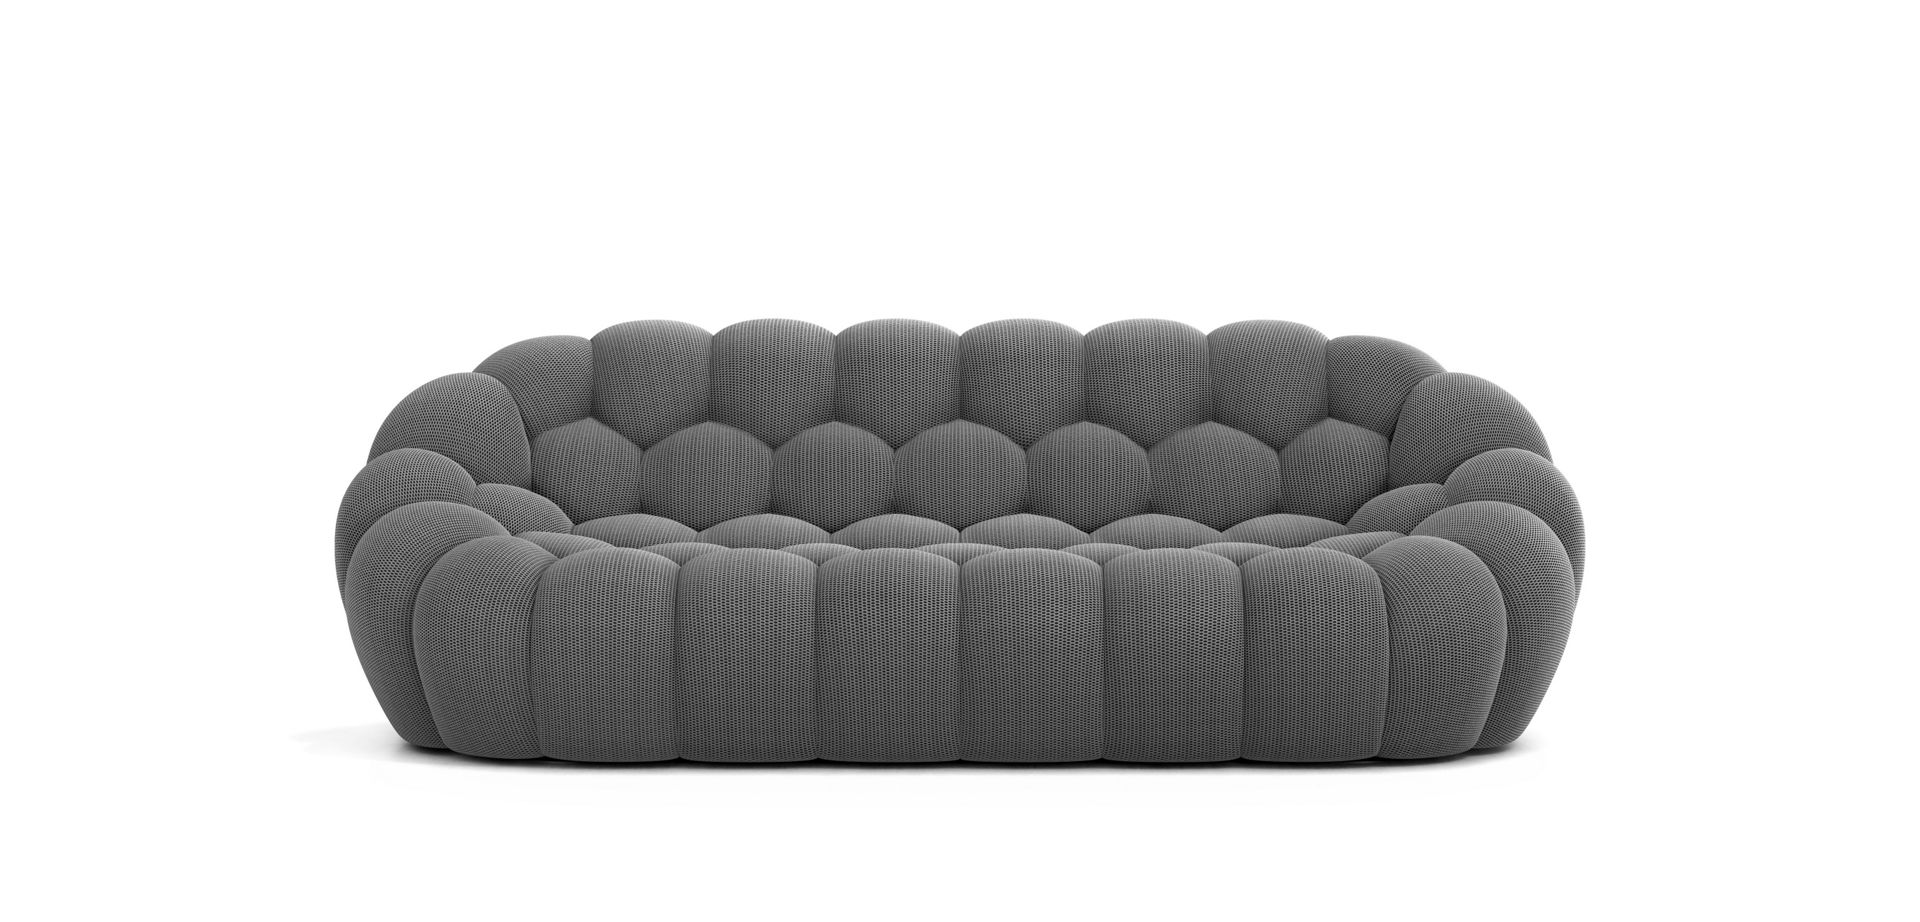 gran sofá 3 plazas - techno 3D image number 10